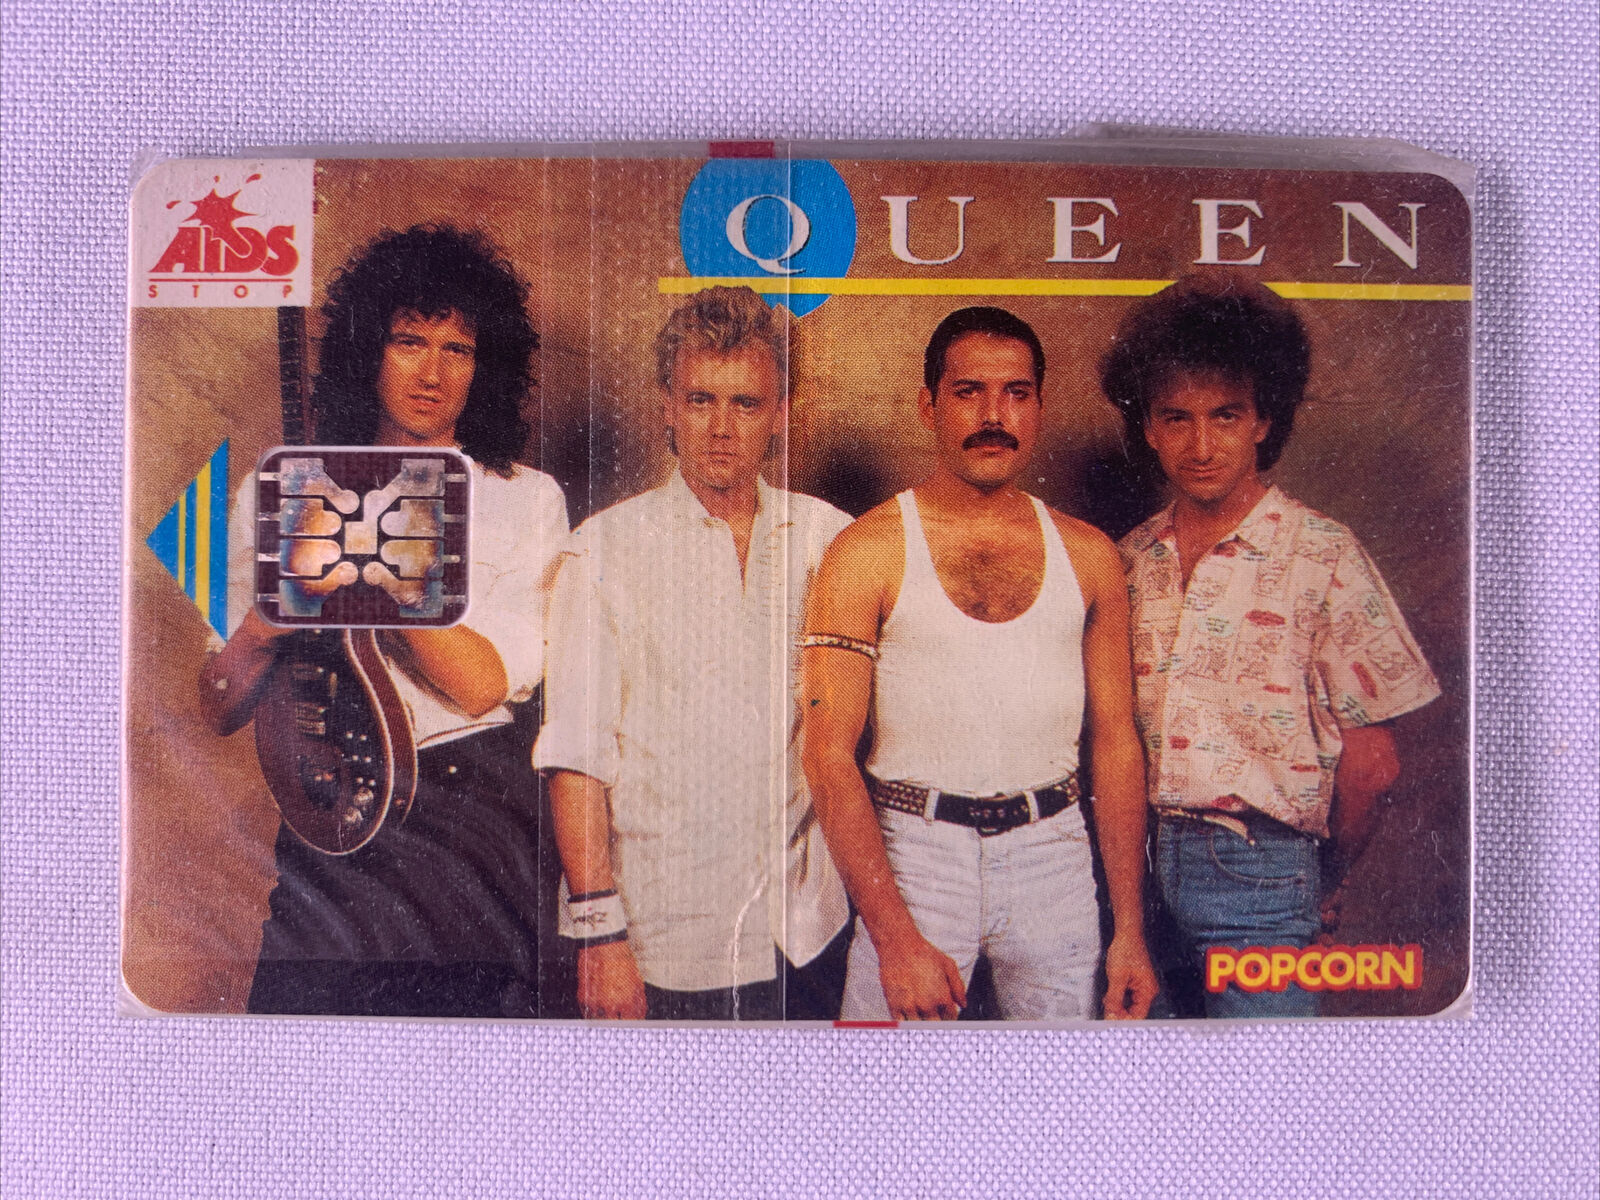 Queen Freddie Mercury Phone Card Sealed Aids Stop Popcorn Czech Republic